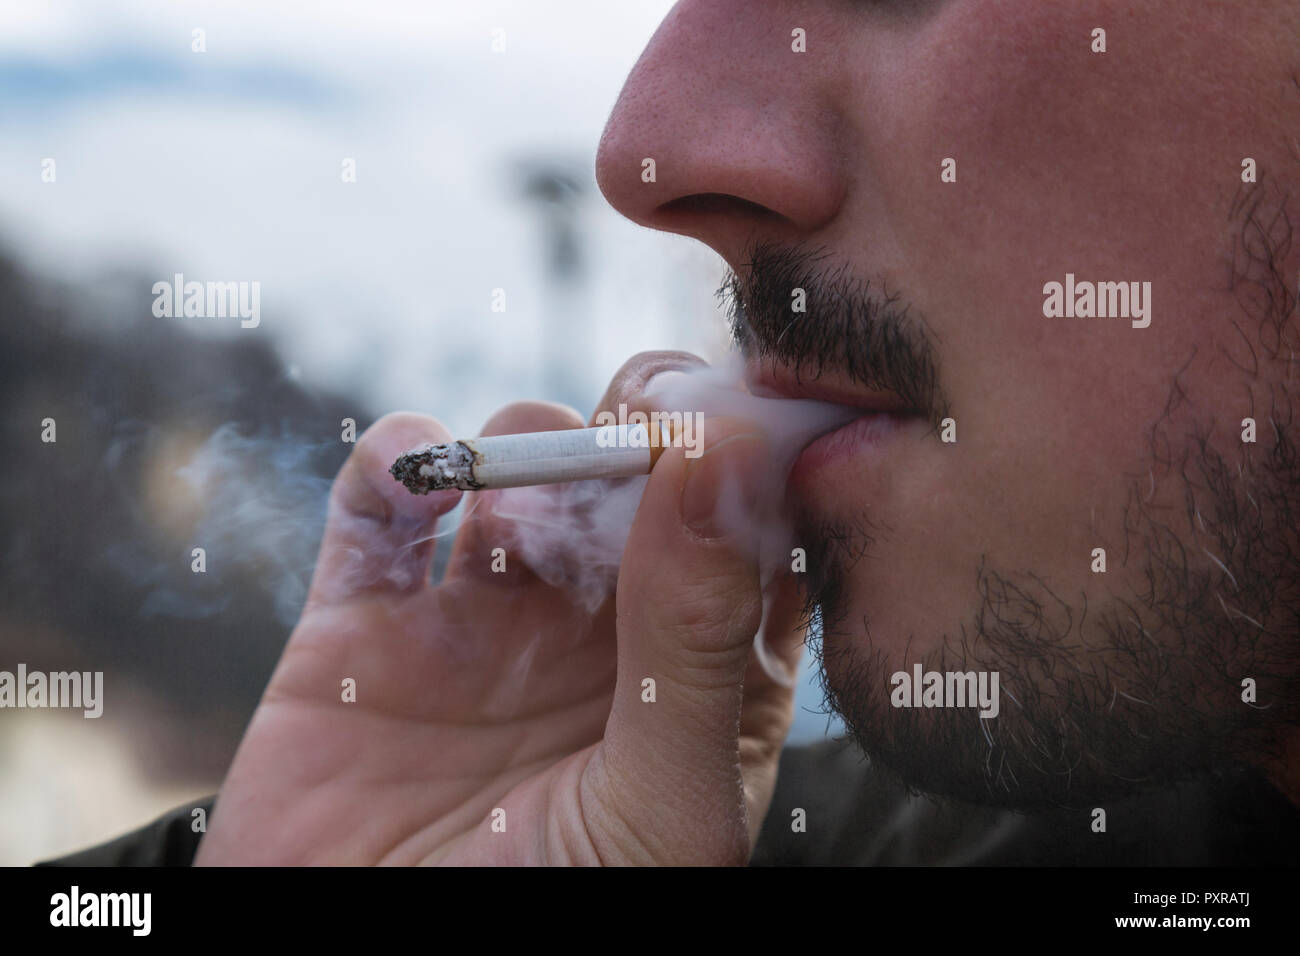 Detail of smoker, cigarette and smoke Stock Photo